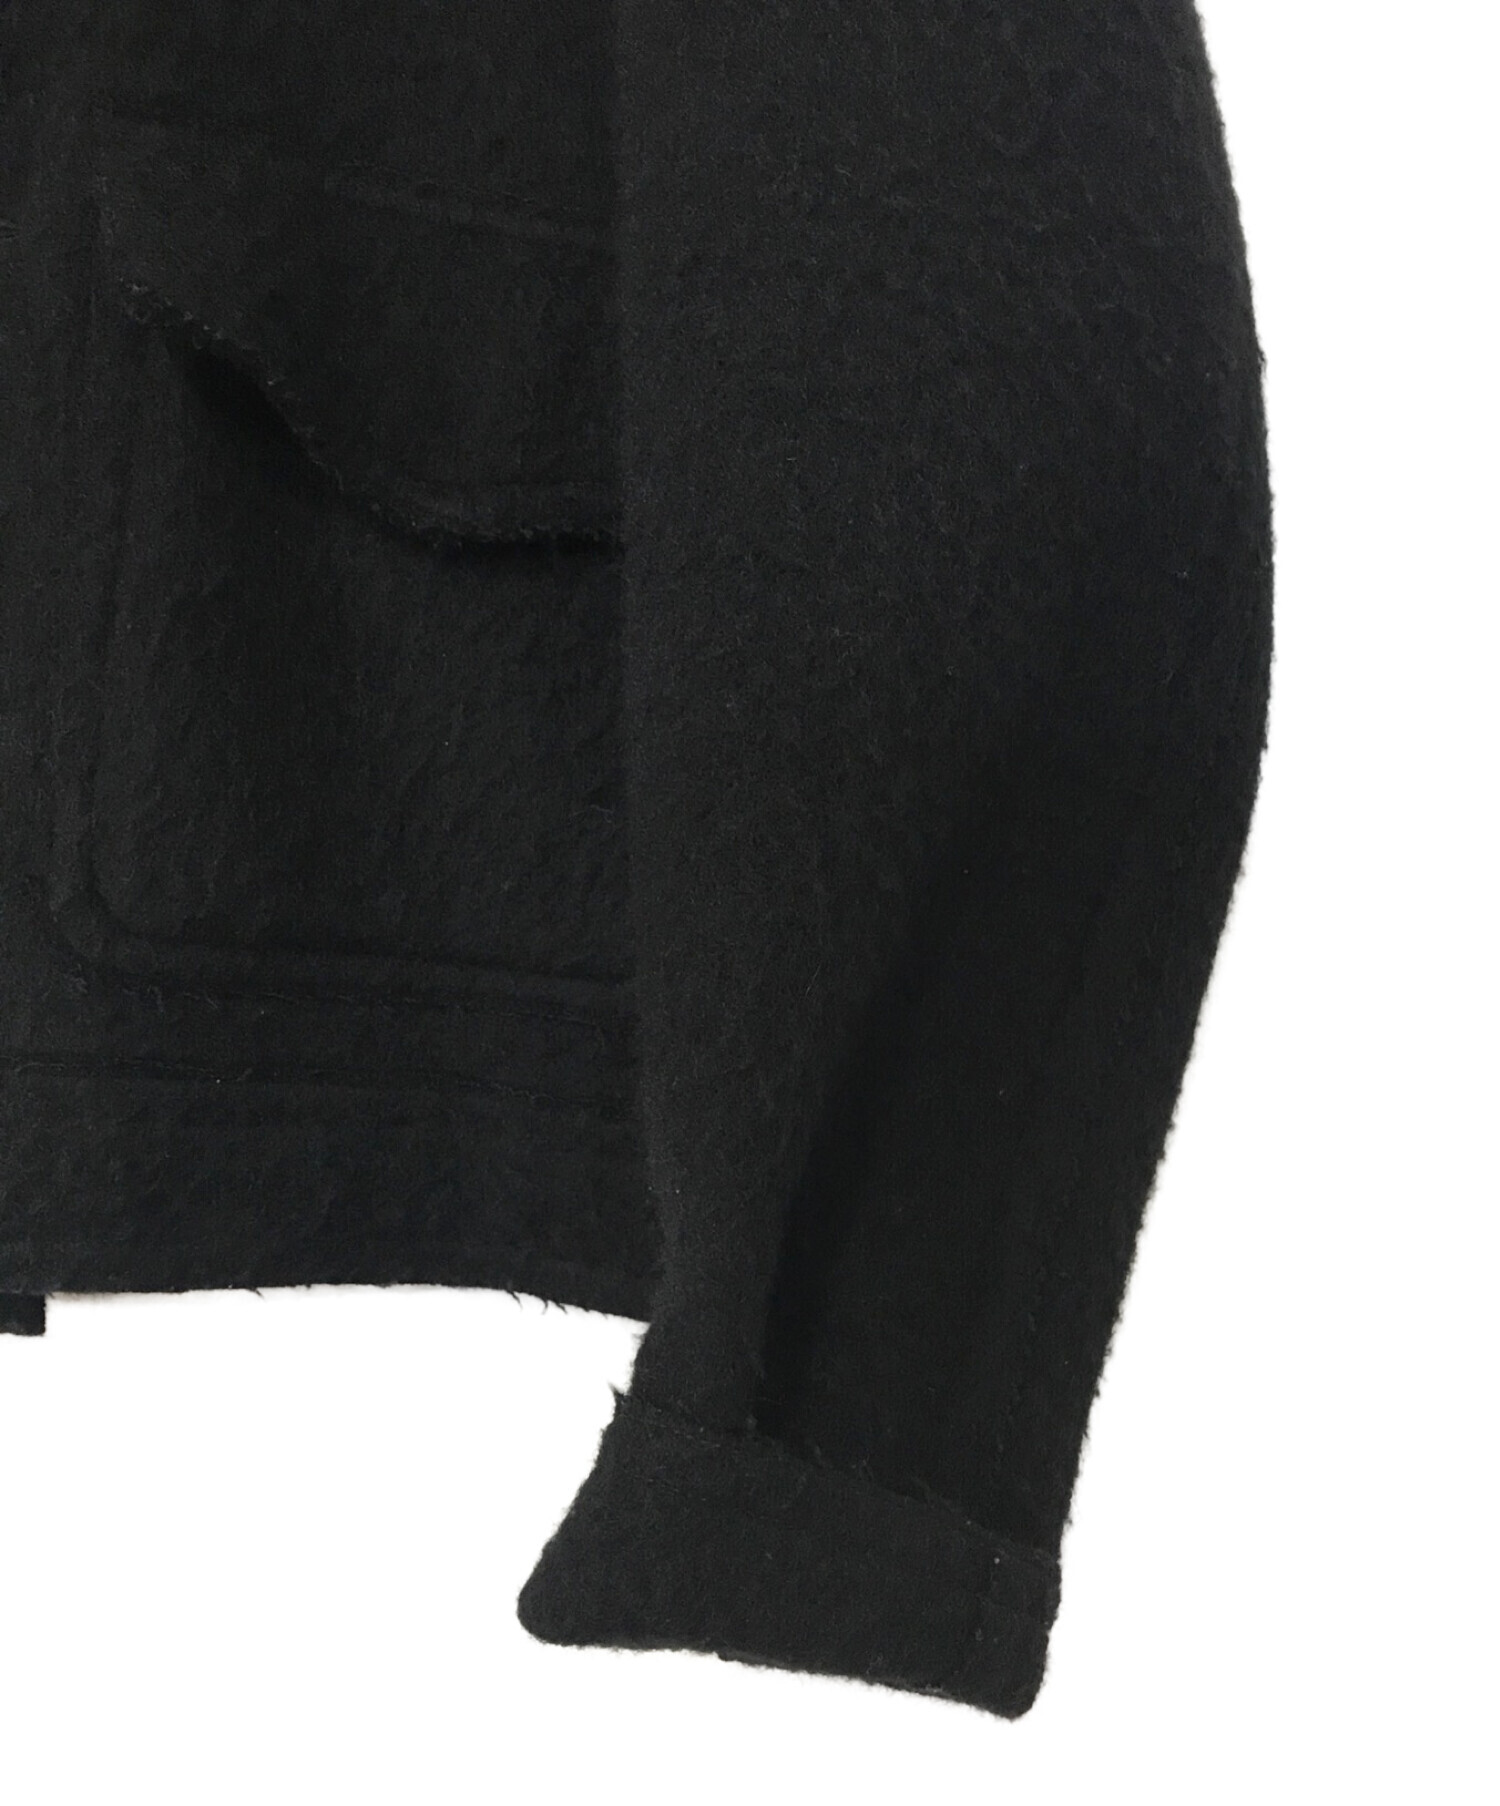 ami (アミ) ウールジャケット ブラック サイズ:表記不明